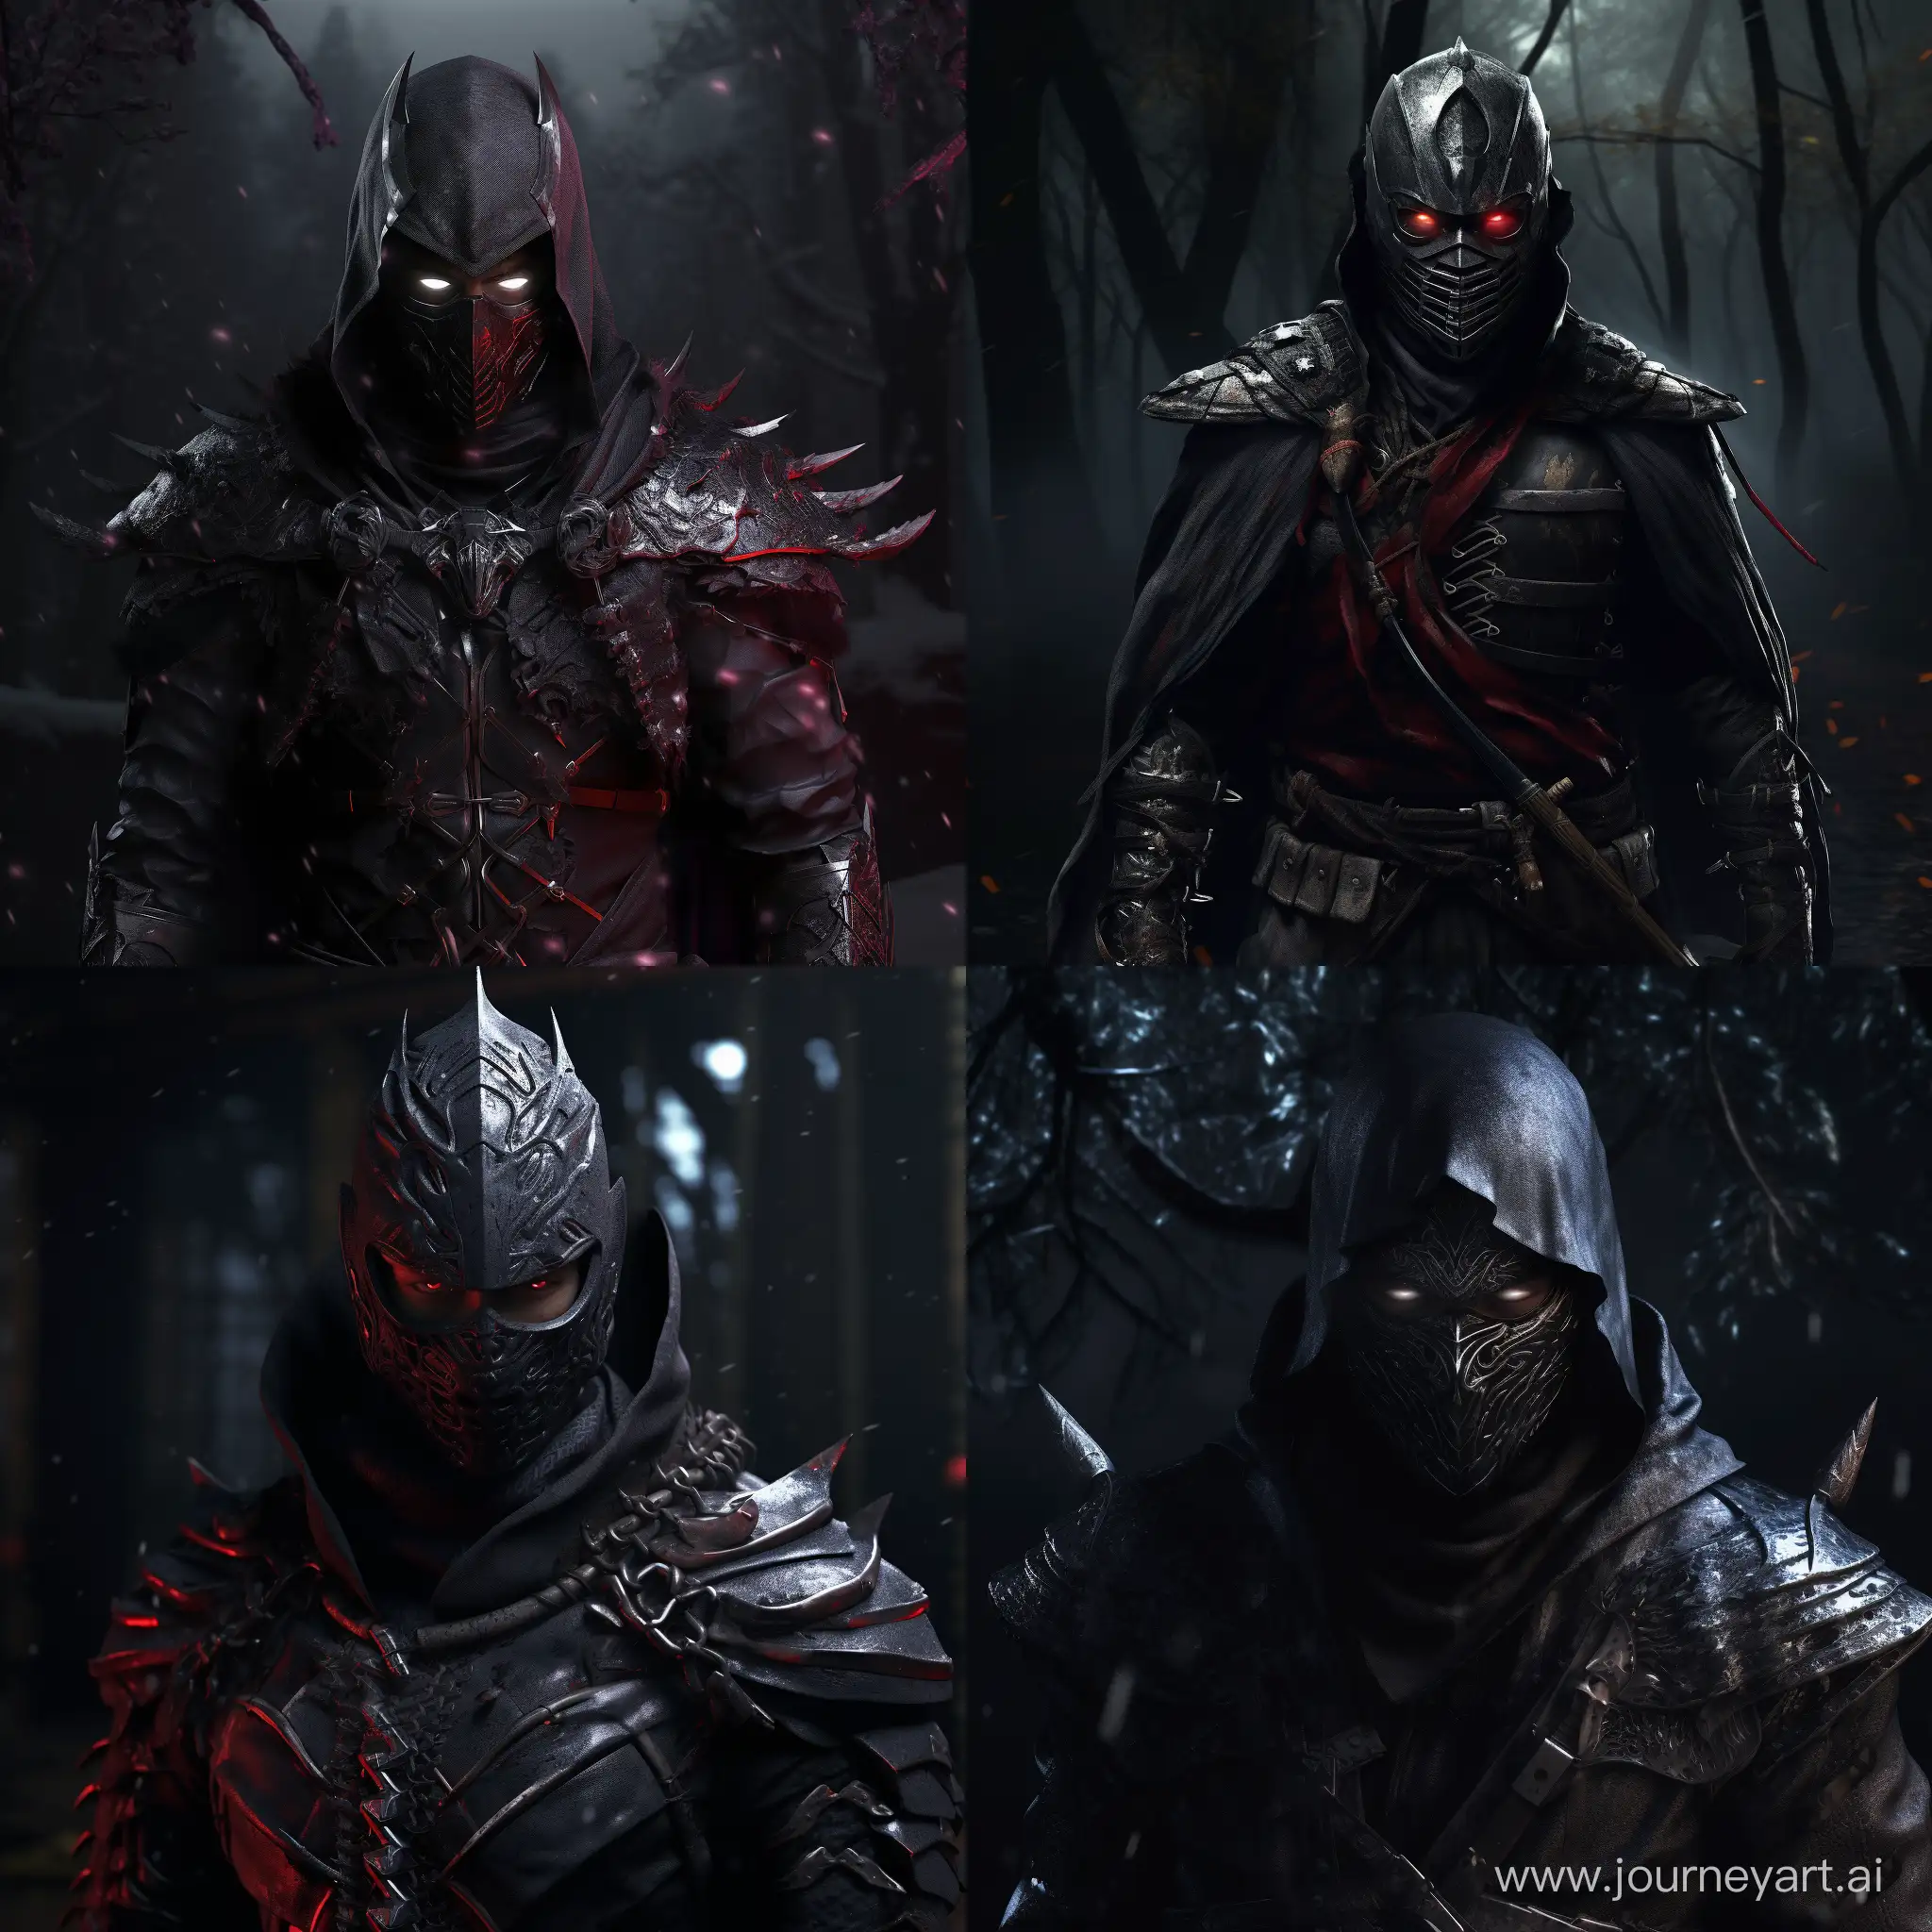 Sinister-Dark-Ninja-and-Samurai-in-a-Chilling-Medieval-Fantasy-Realm